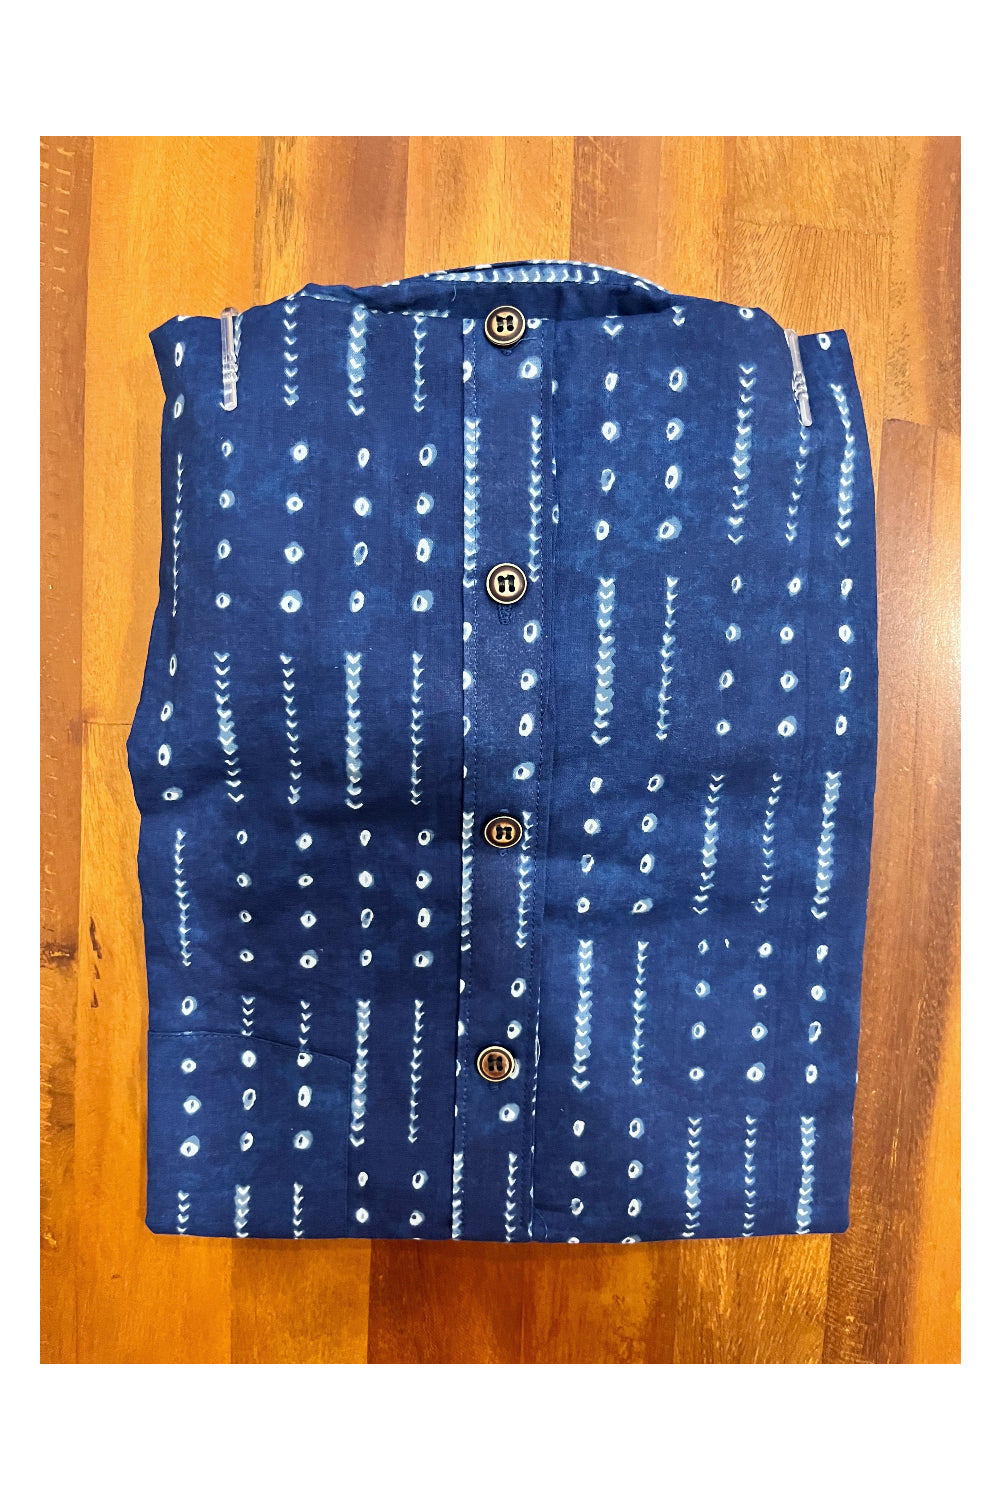 Southloom Jaipur Cotton Blue Hand Block Printed Shirt (Half Sleeves)